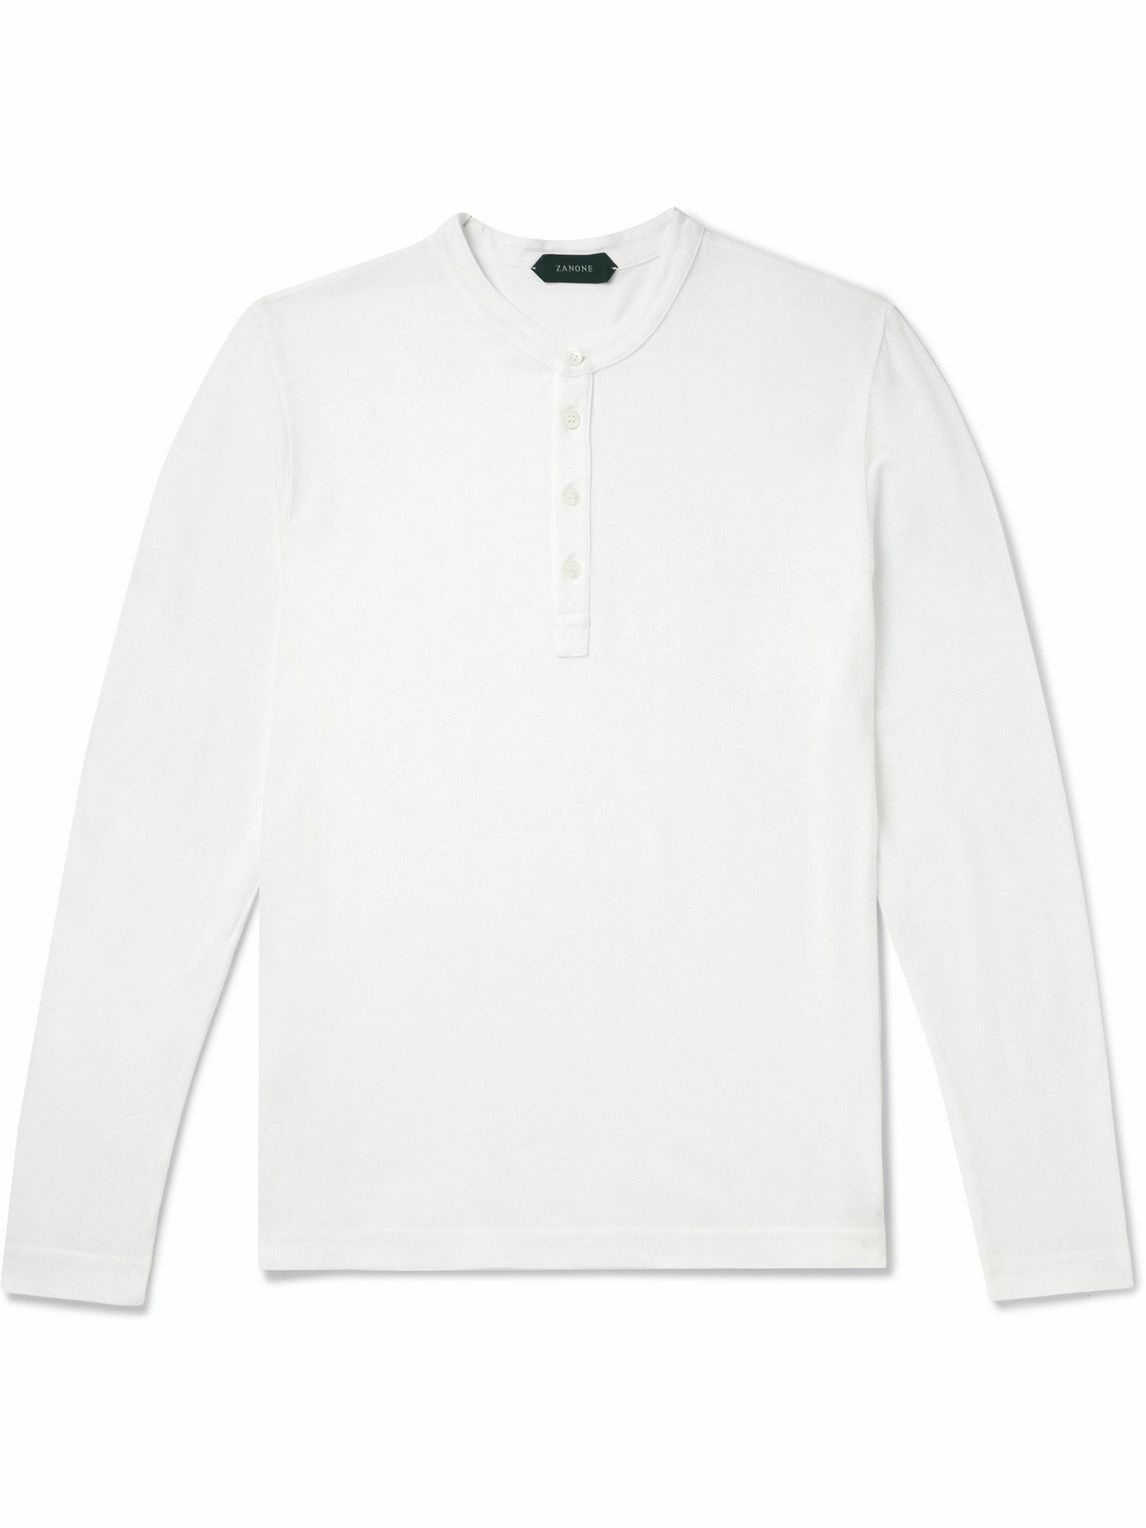 Photo: Incotex - Zanone Garment-Dyed Cotton-Piqué Henley T-Shirt - White